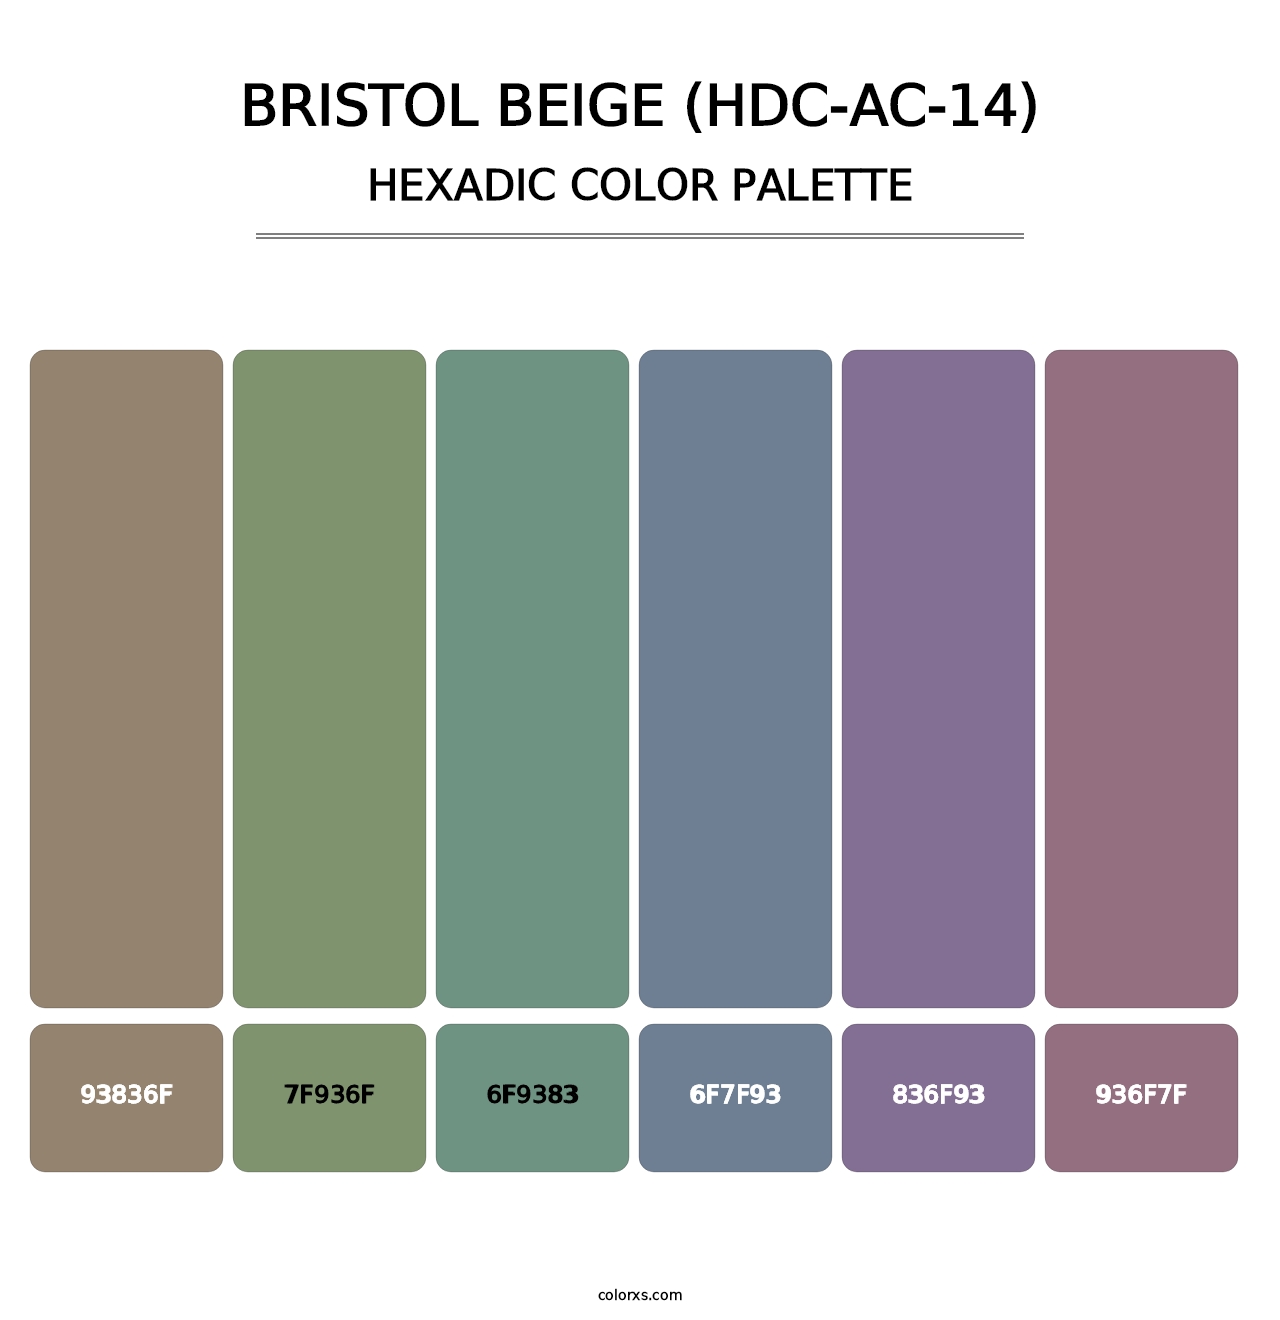 Bristol Beige (HDC-AC-14) - Hexadic Color Palette